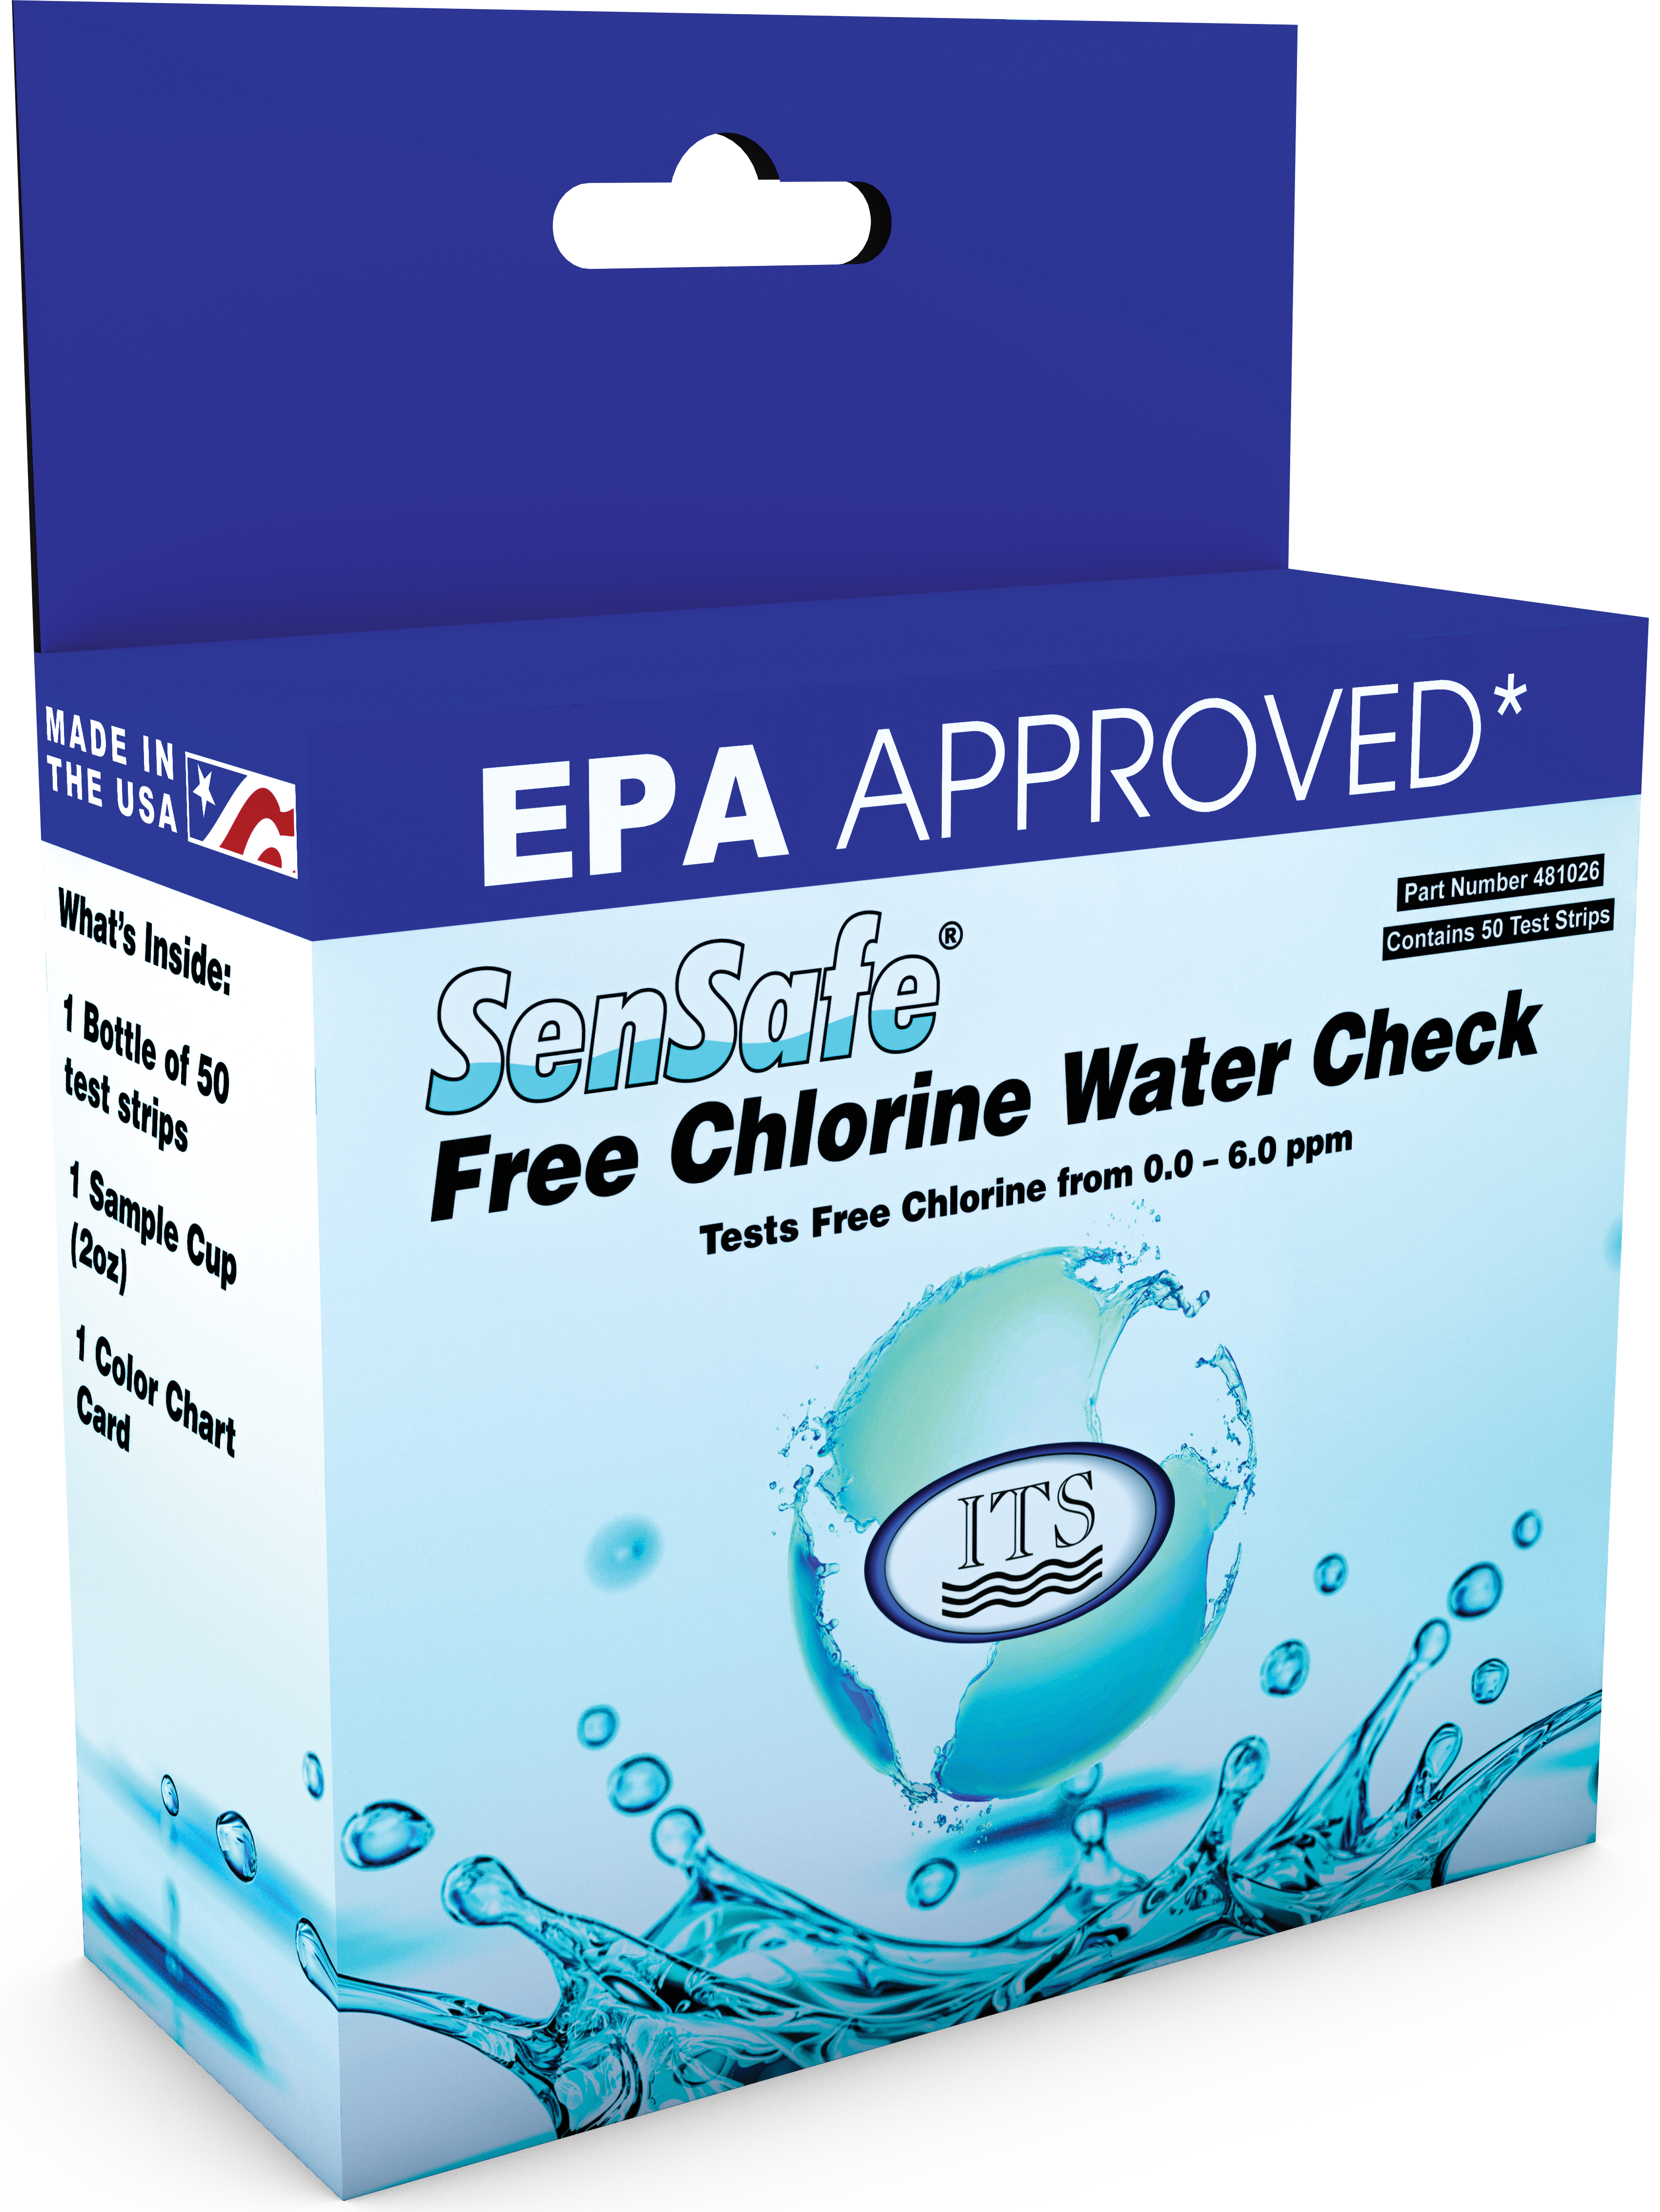 free chlorine water check box